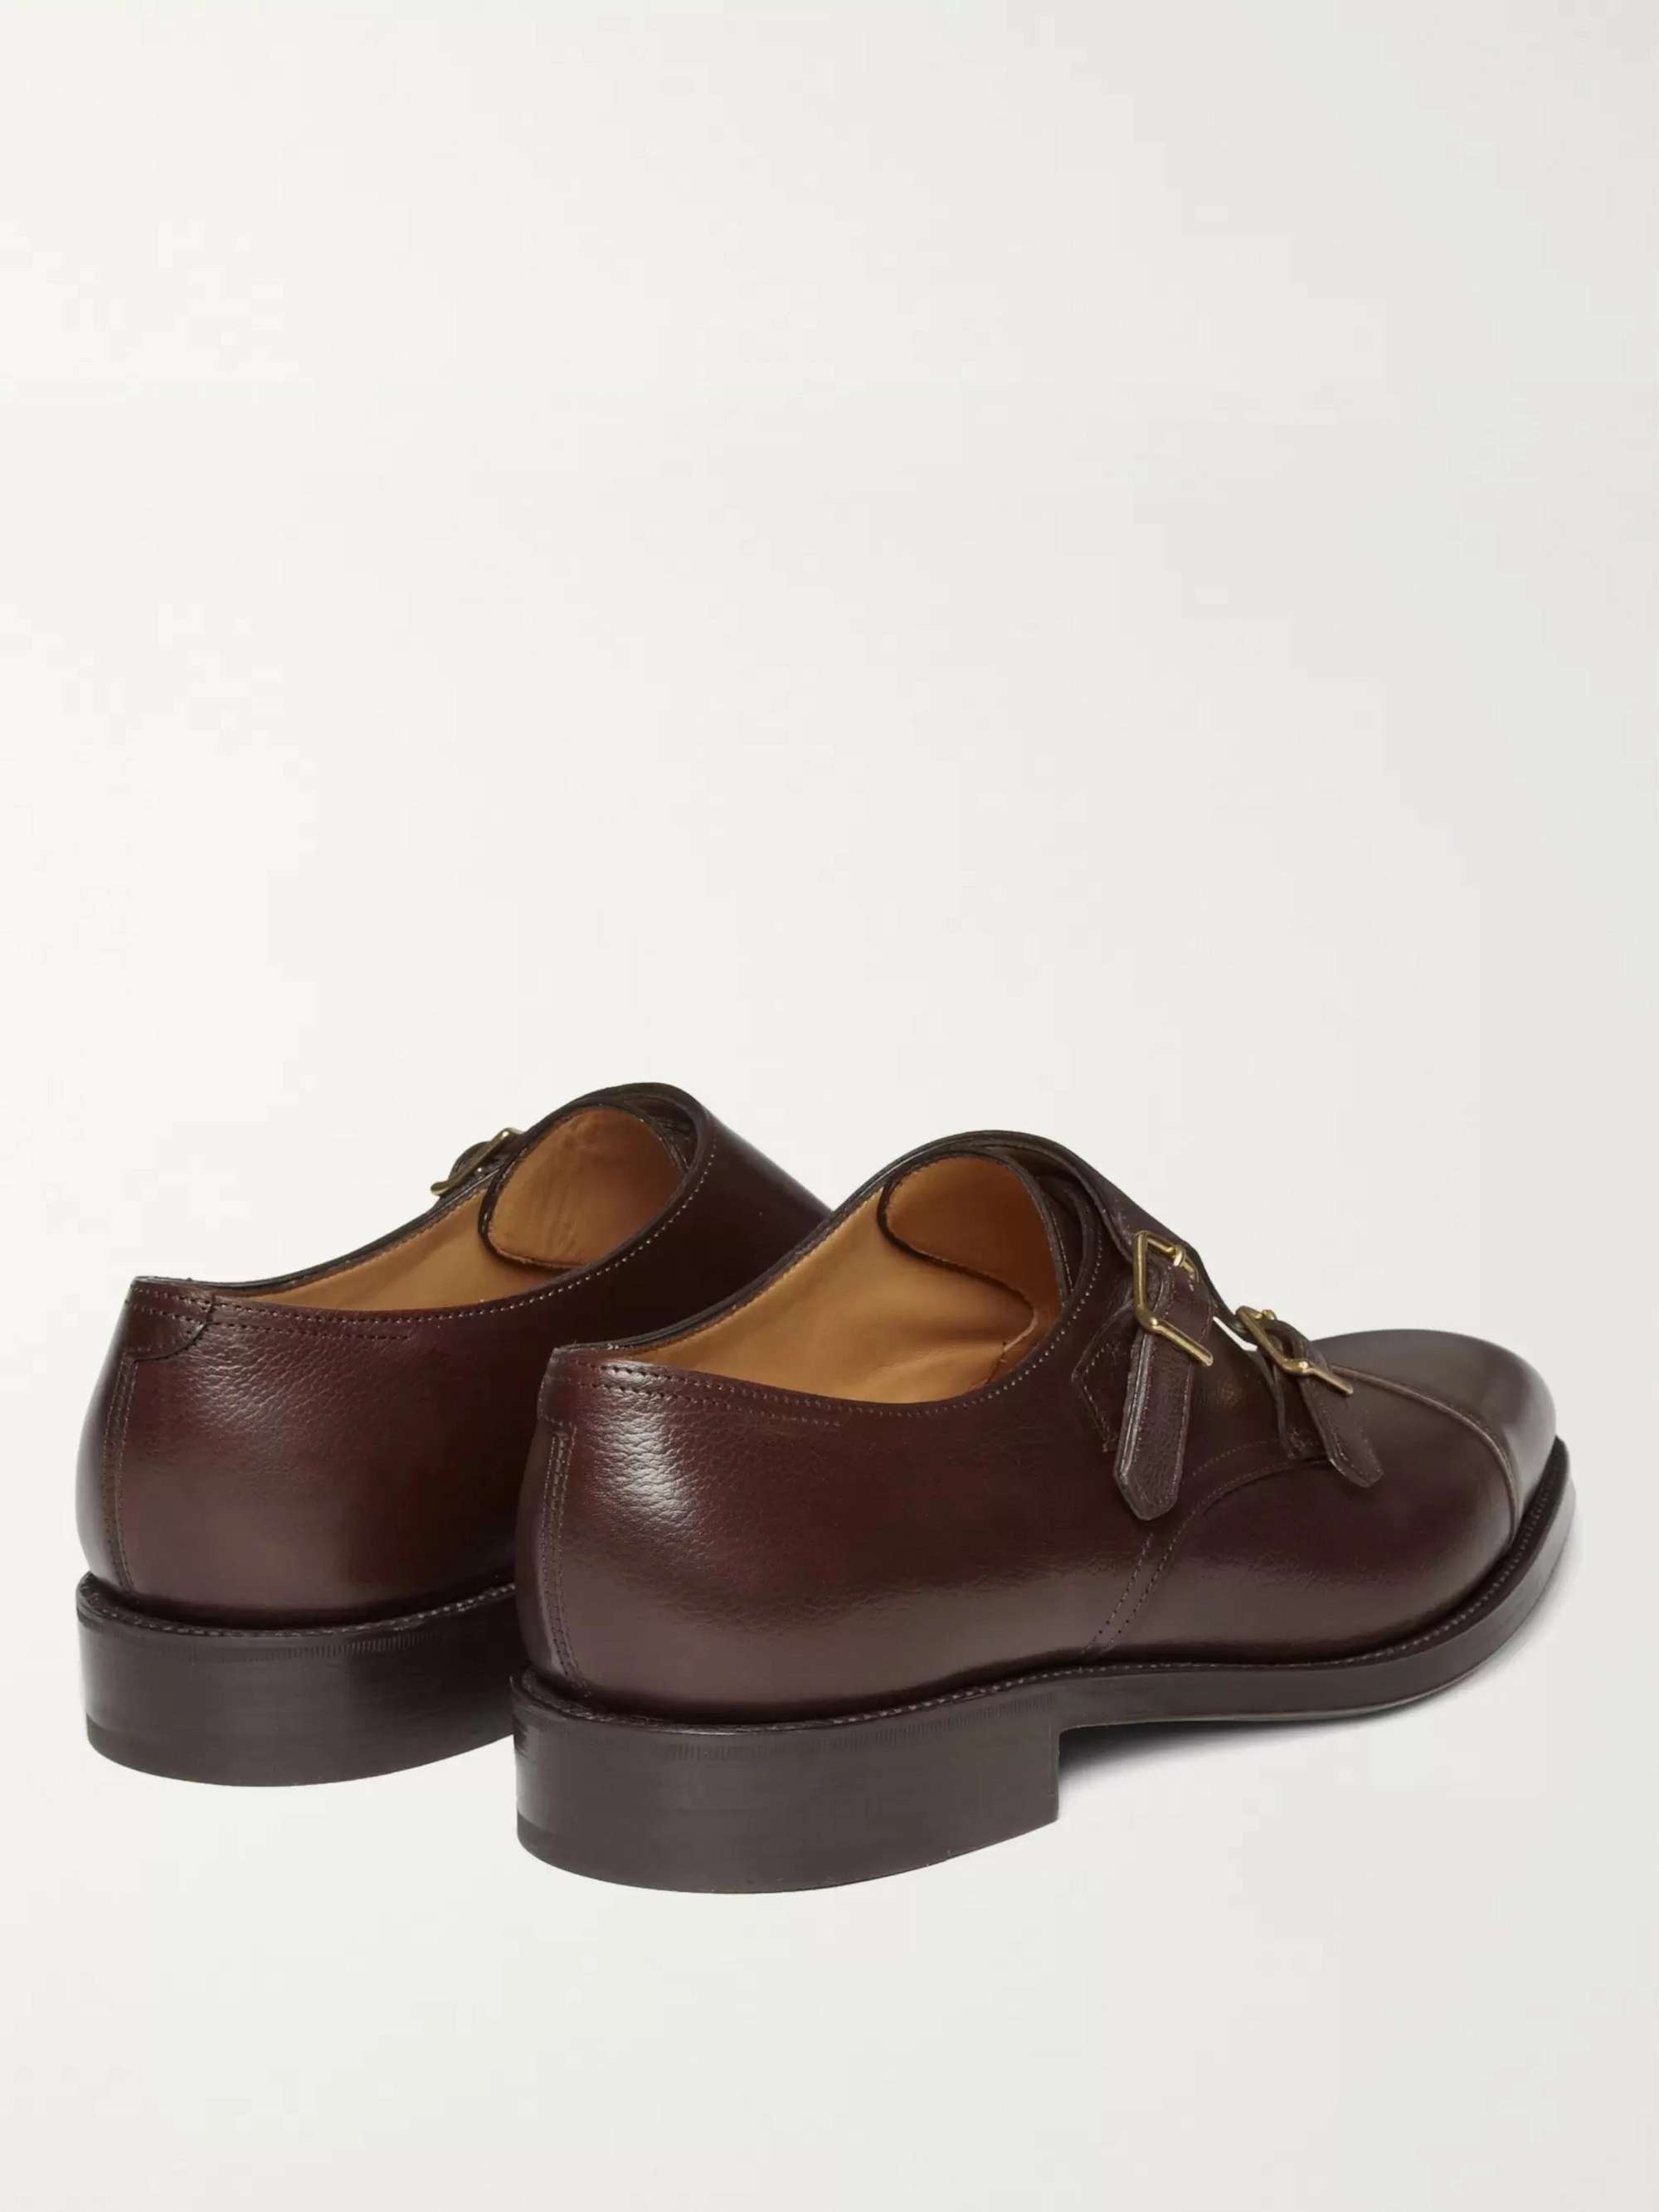 JOHN LOBB William Leather Monk-Strap Shoes